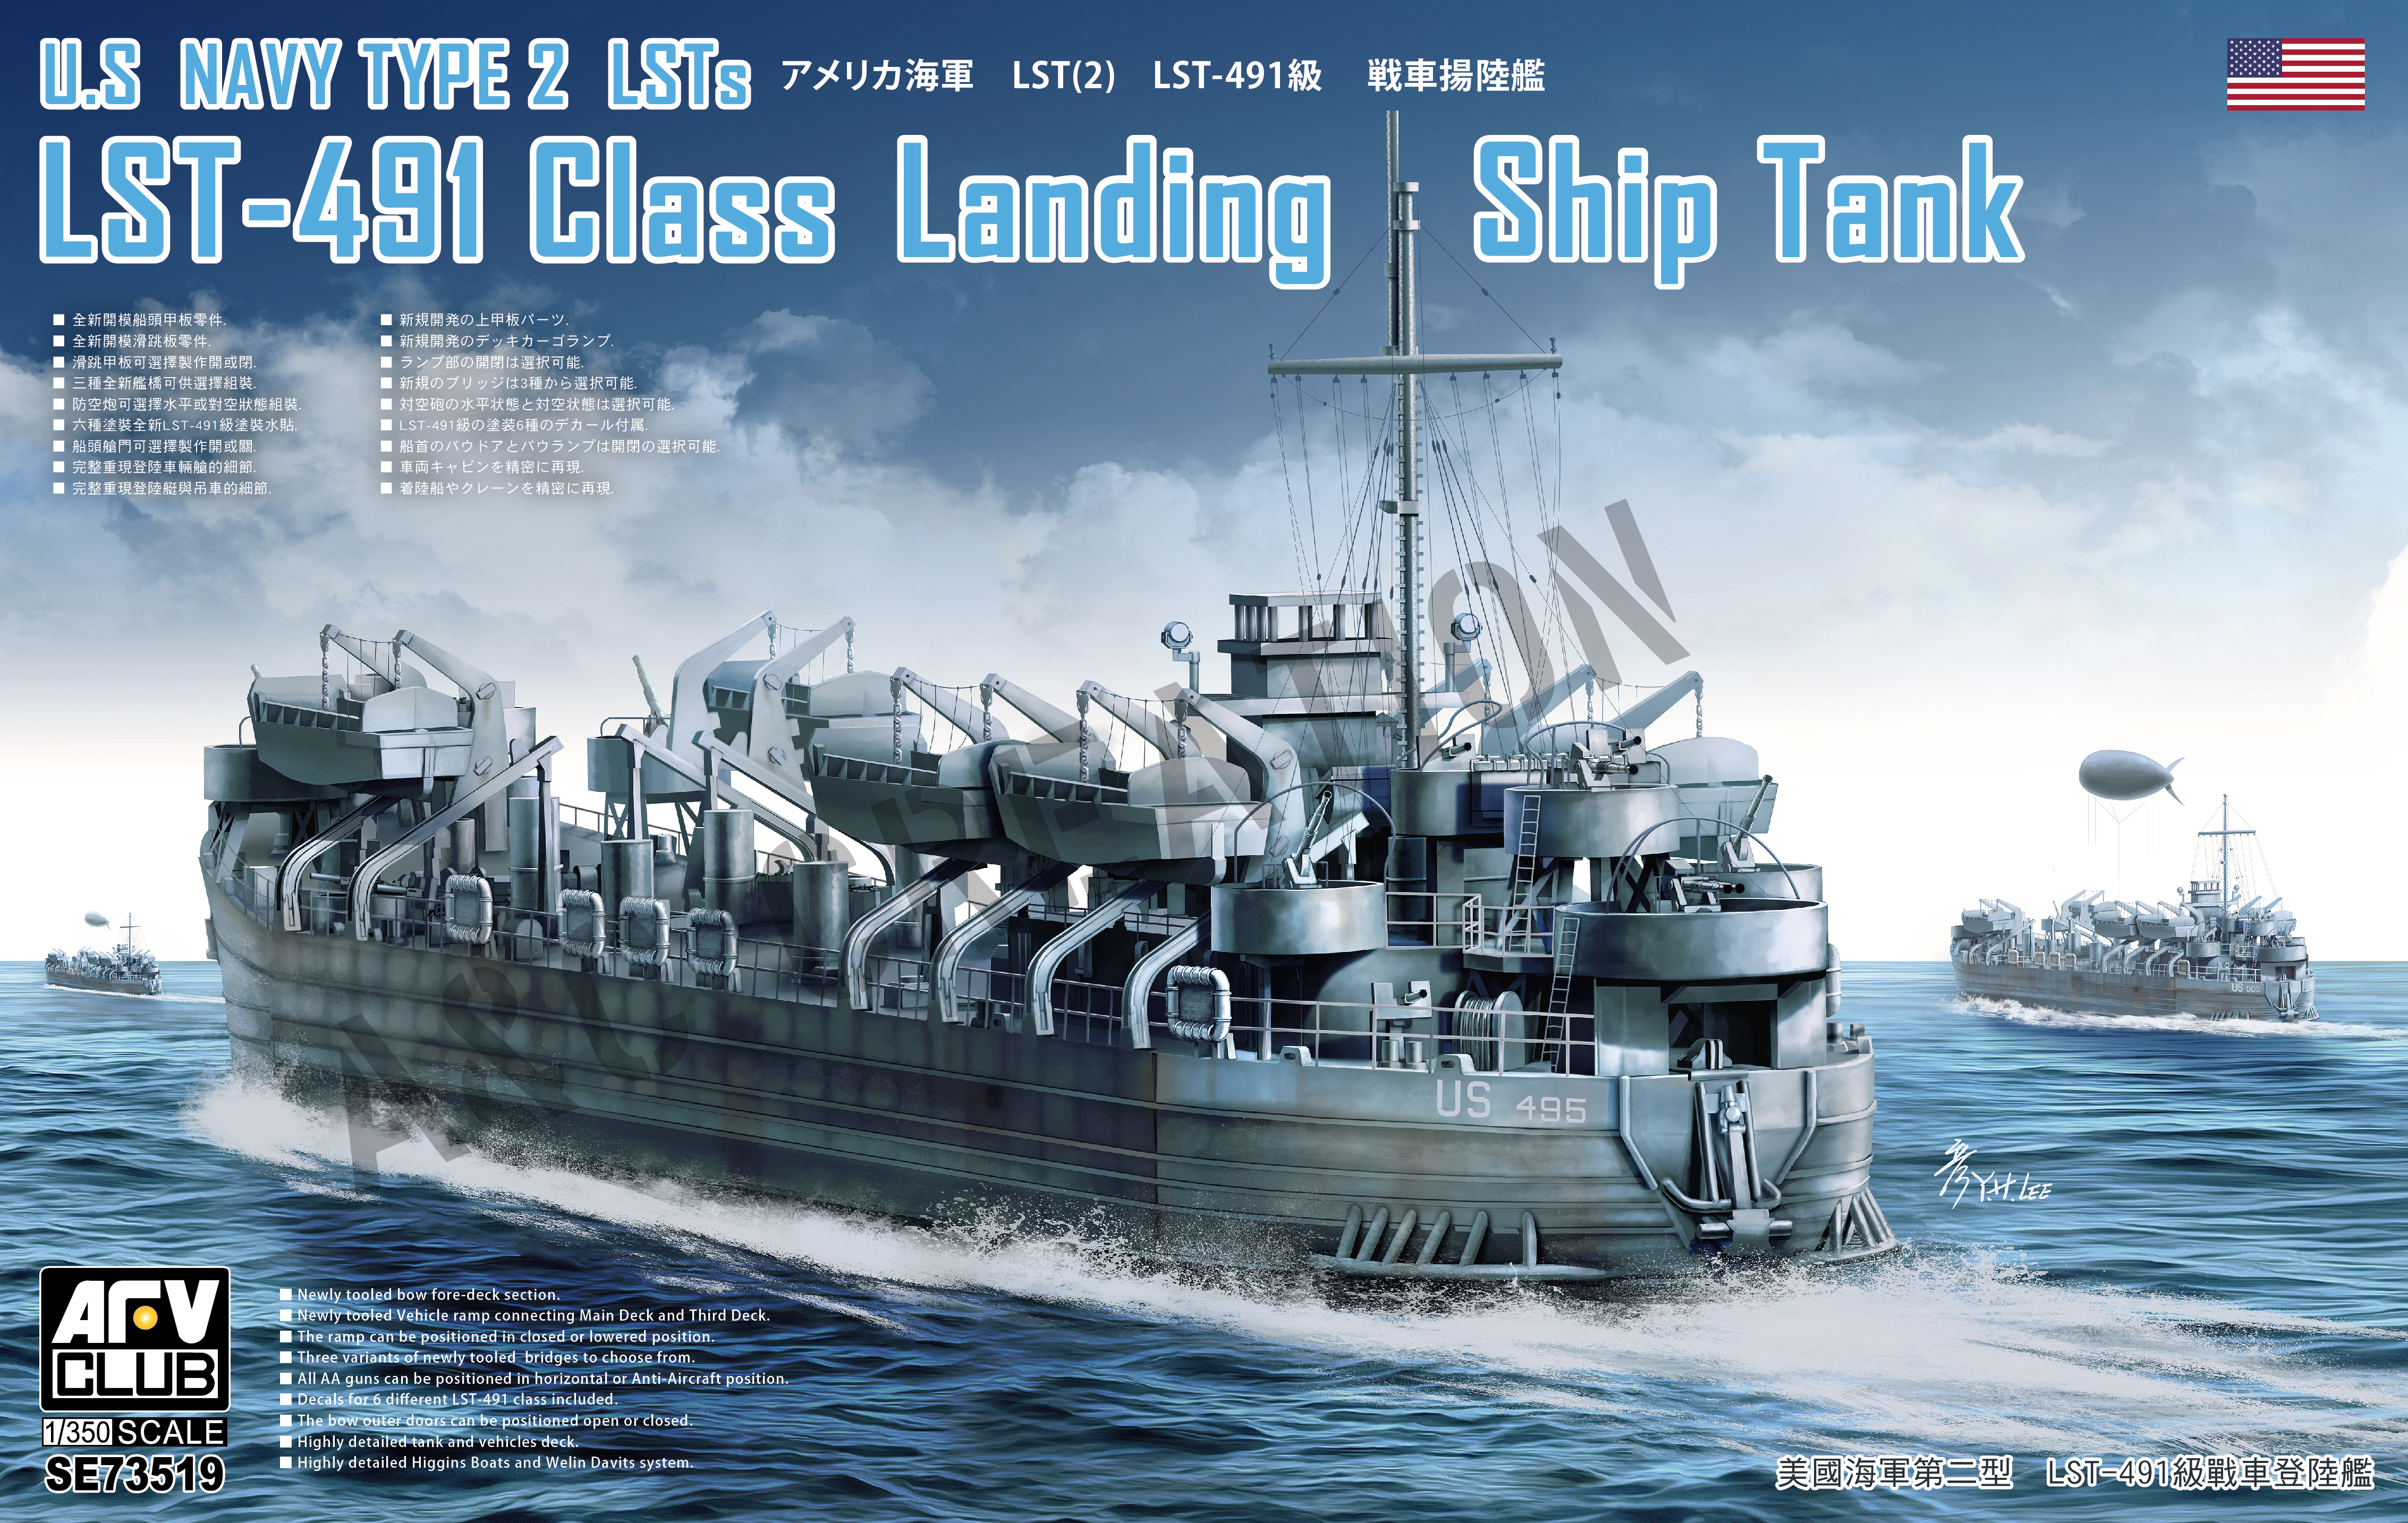 SE73519 US Navy Type 2 LSTs LST-491 Class Landing Ship Tank